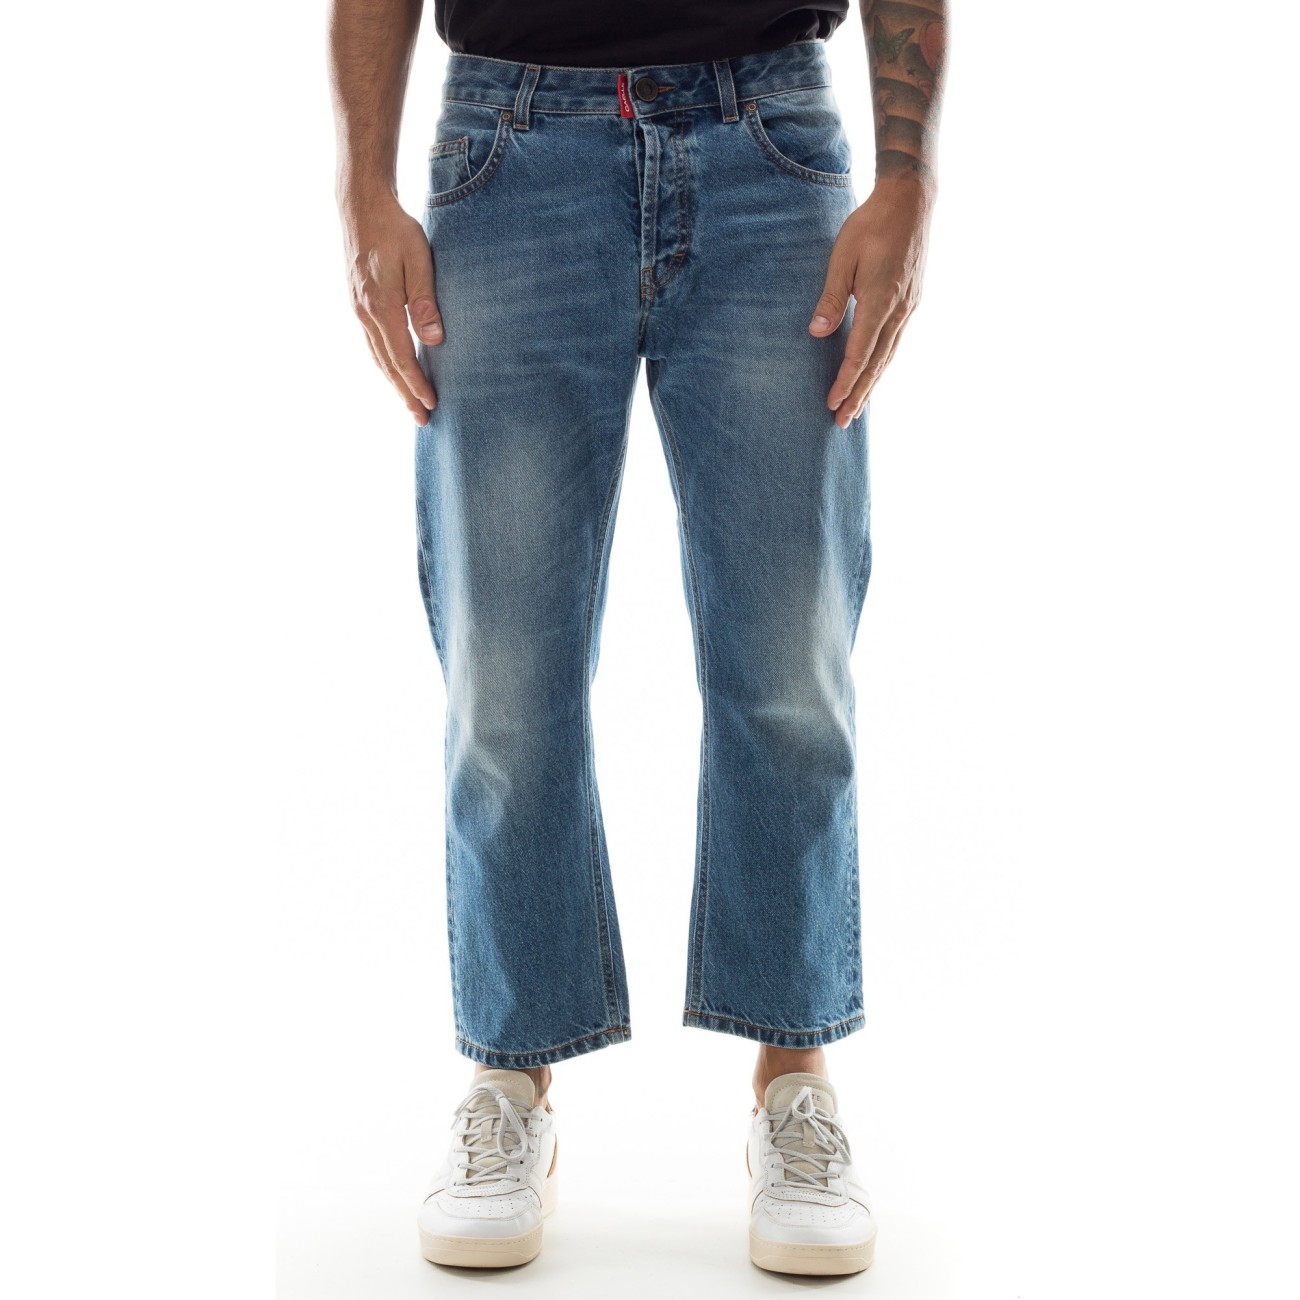 Gaelle jeans uomo chiaro